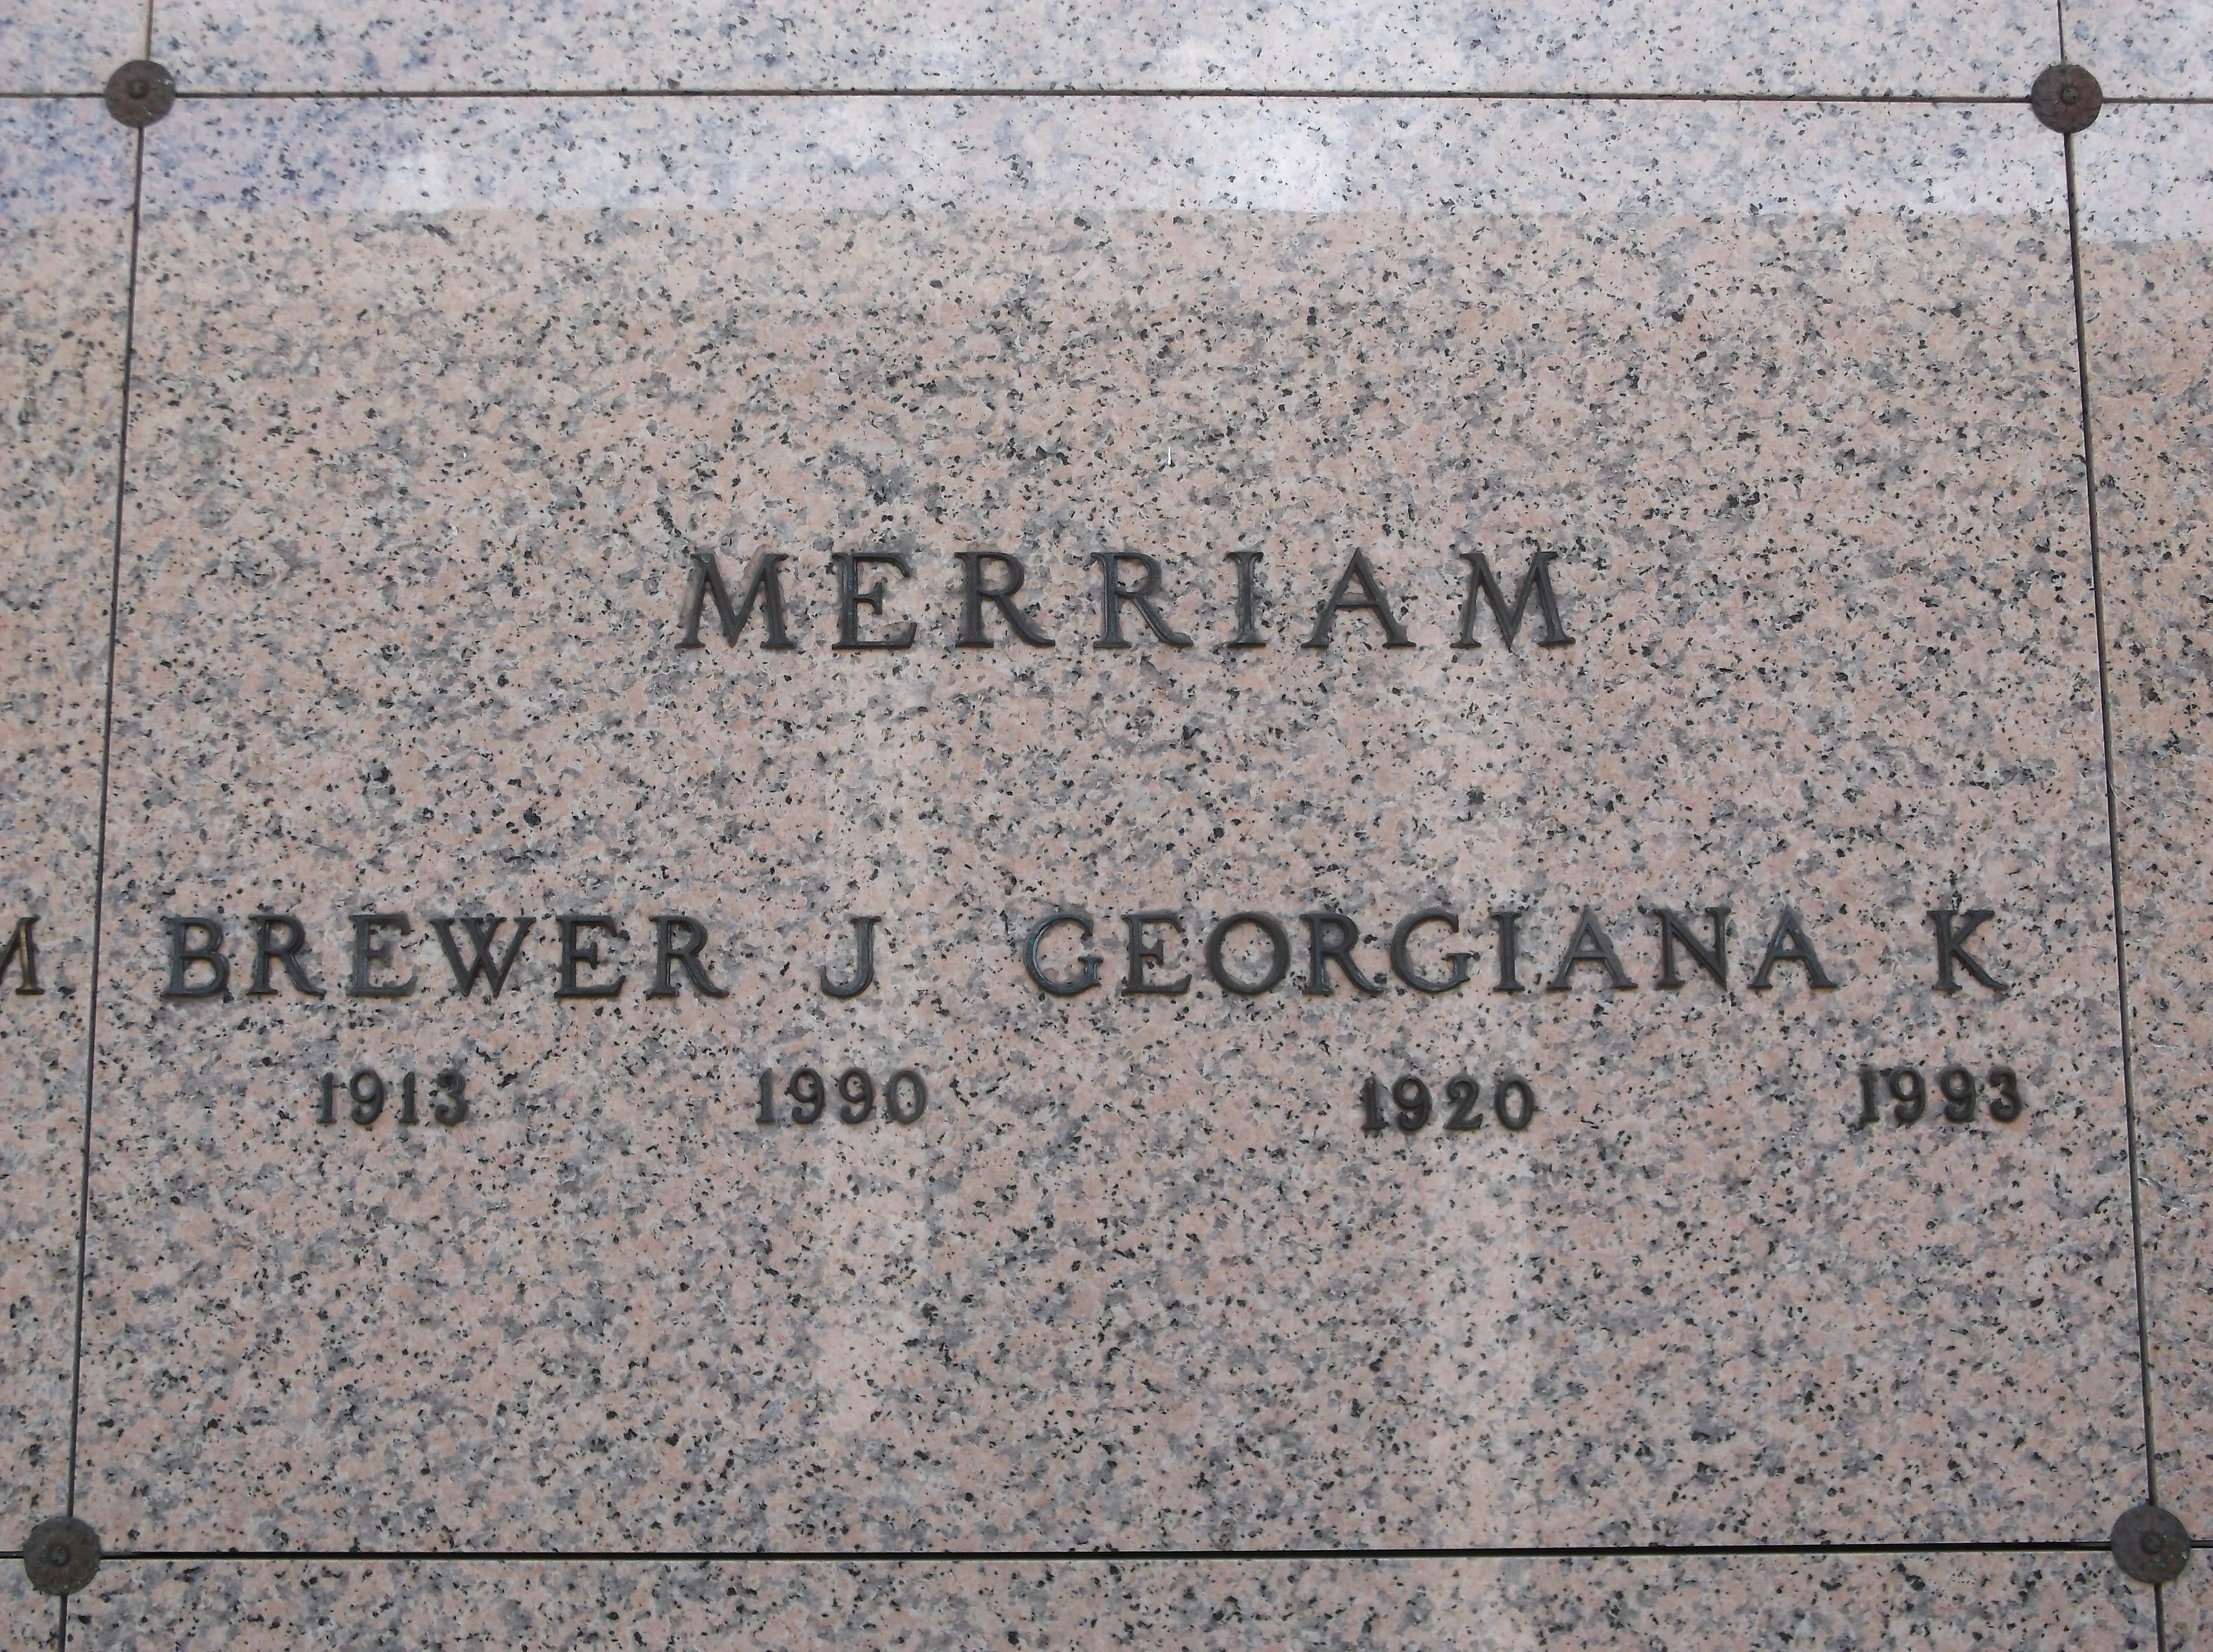 Brewer J Merriam